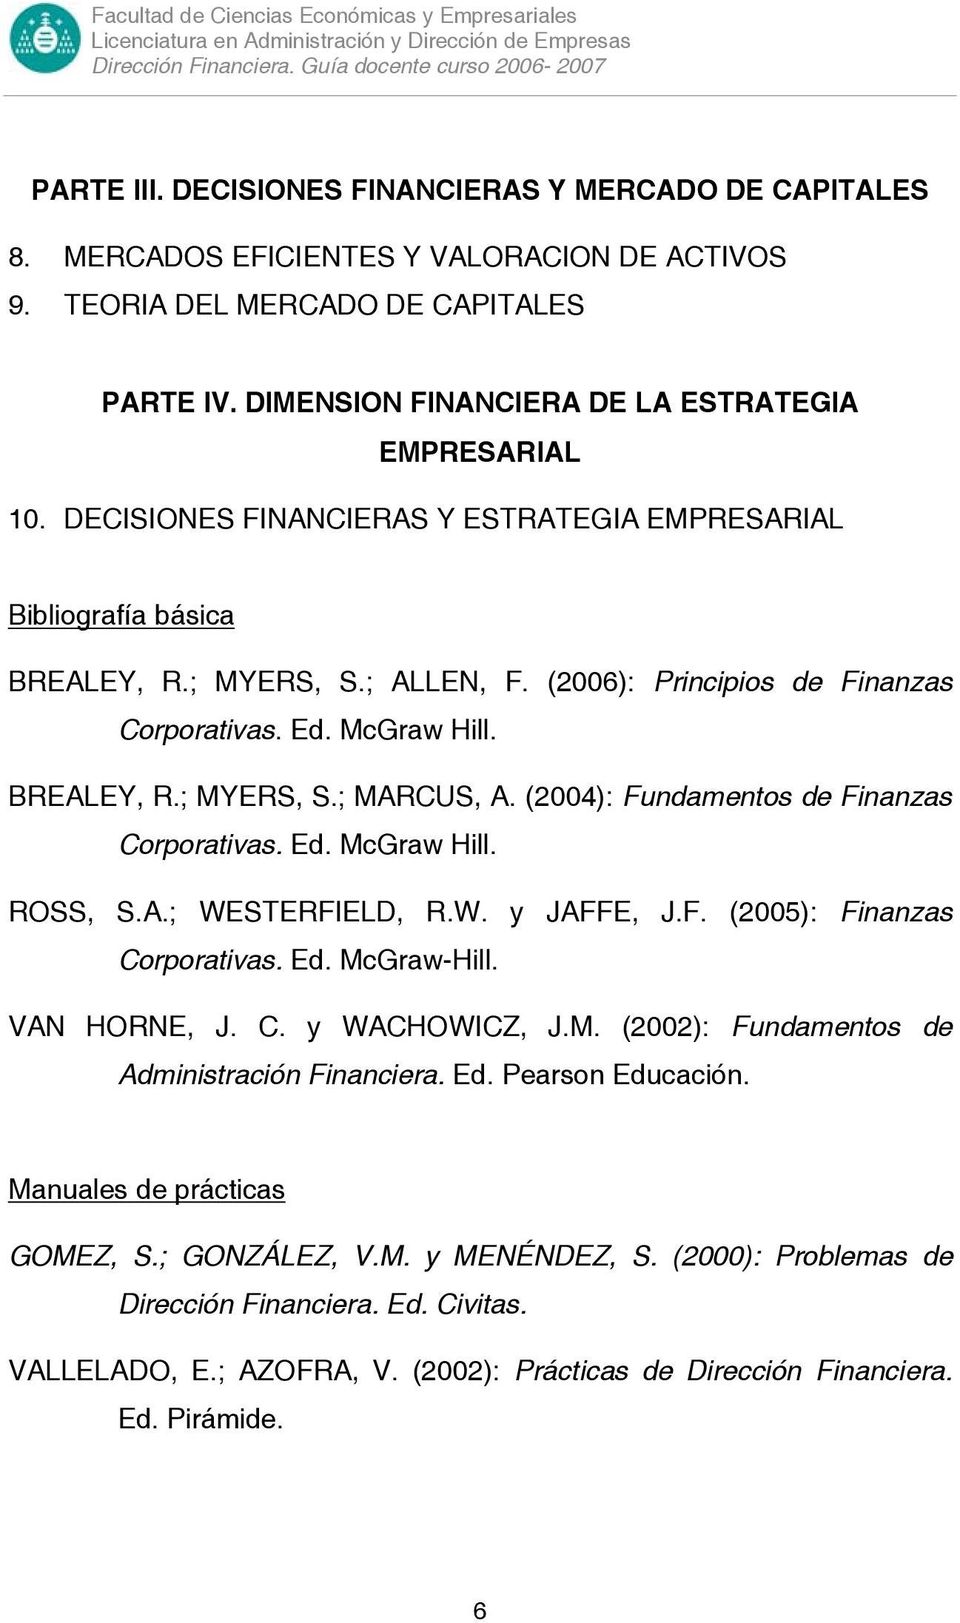 Ed. McGraw Hill. BREALEY, R.; MYERS, S.; MARCUS, A. (2004): Fundamentos de Finanzas Corporativas. Ed. McGraw Hill. ROSS, S.A.; WESTERFIELD, R.W. y JAFFE, J.F. (2005): Finanzas Corporativas. Ed. McGraw-Hill.